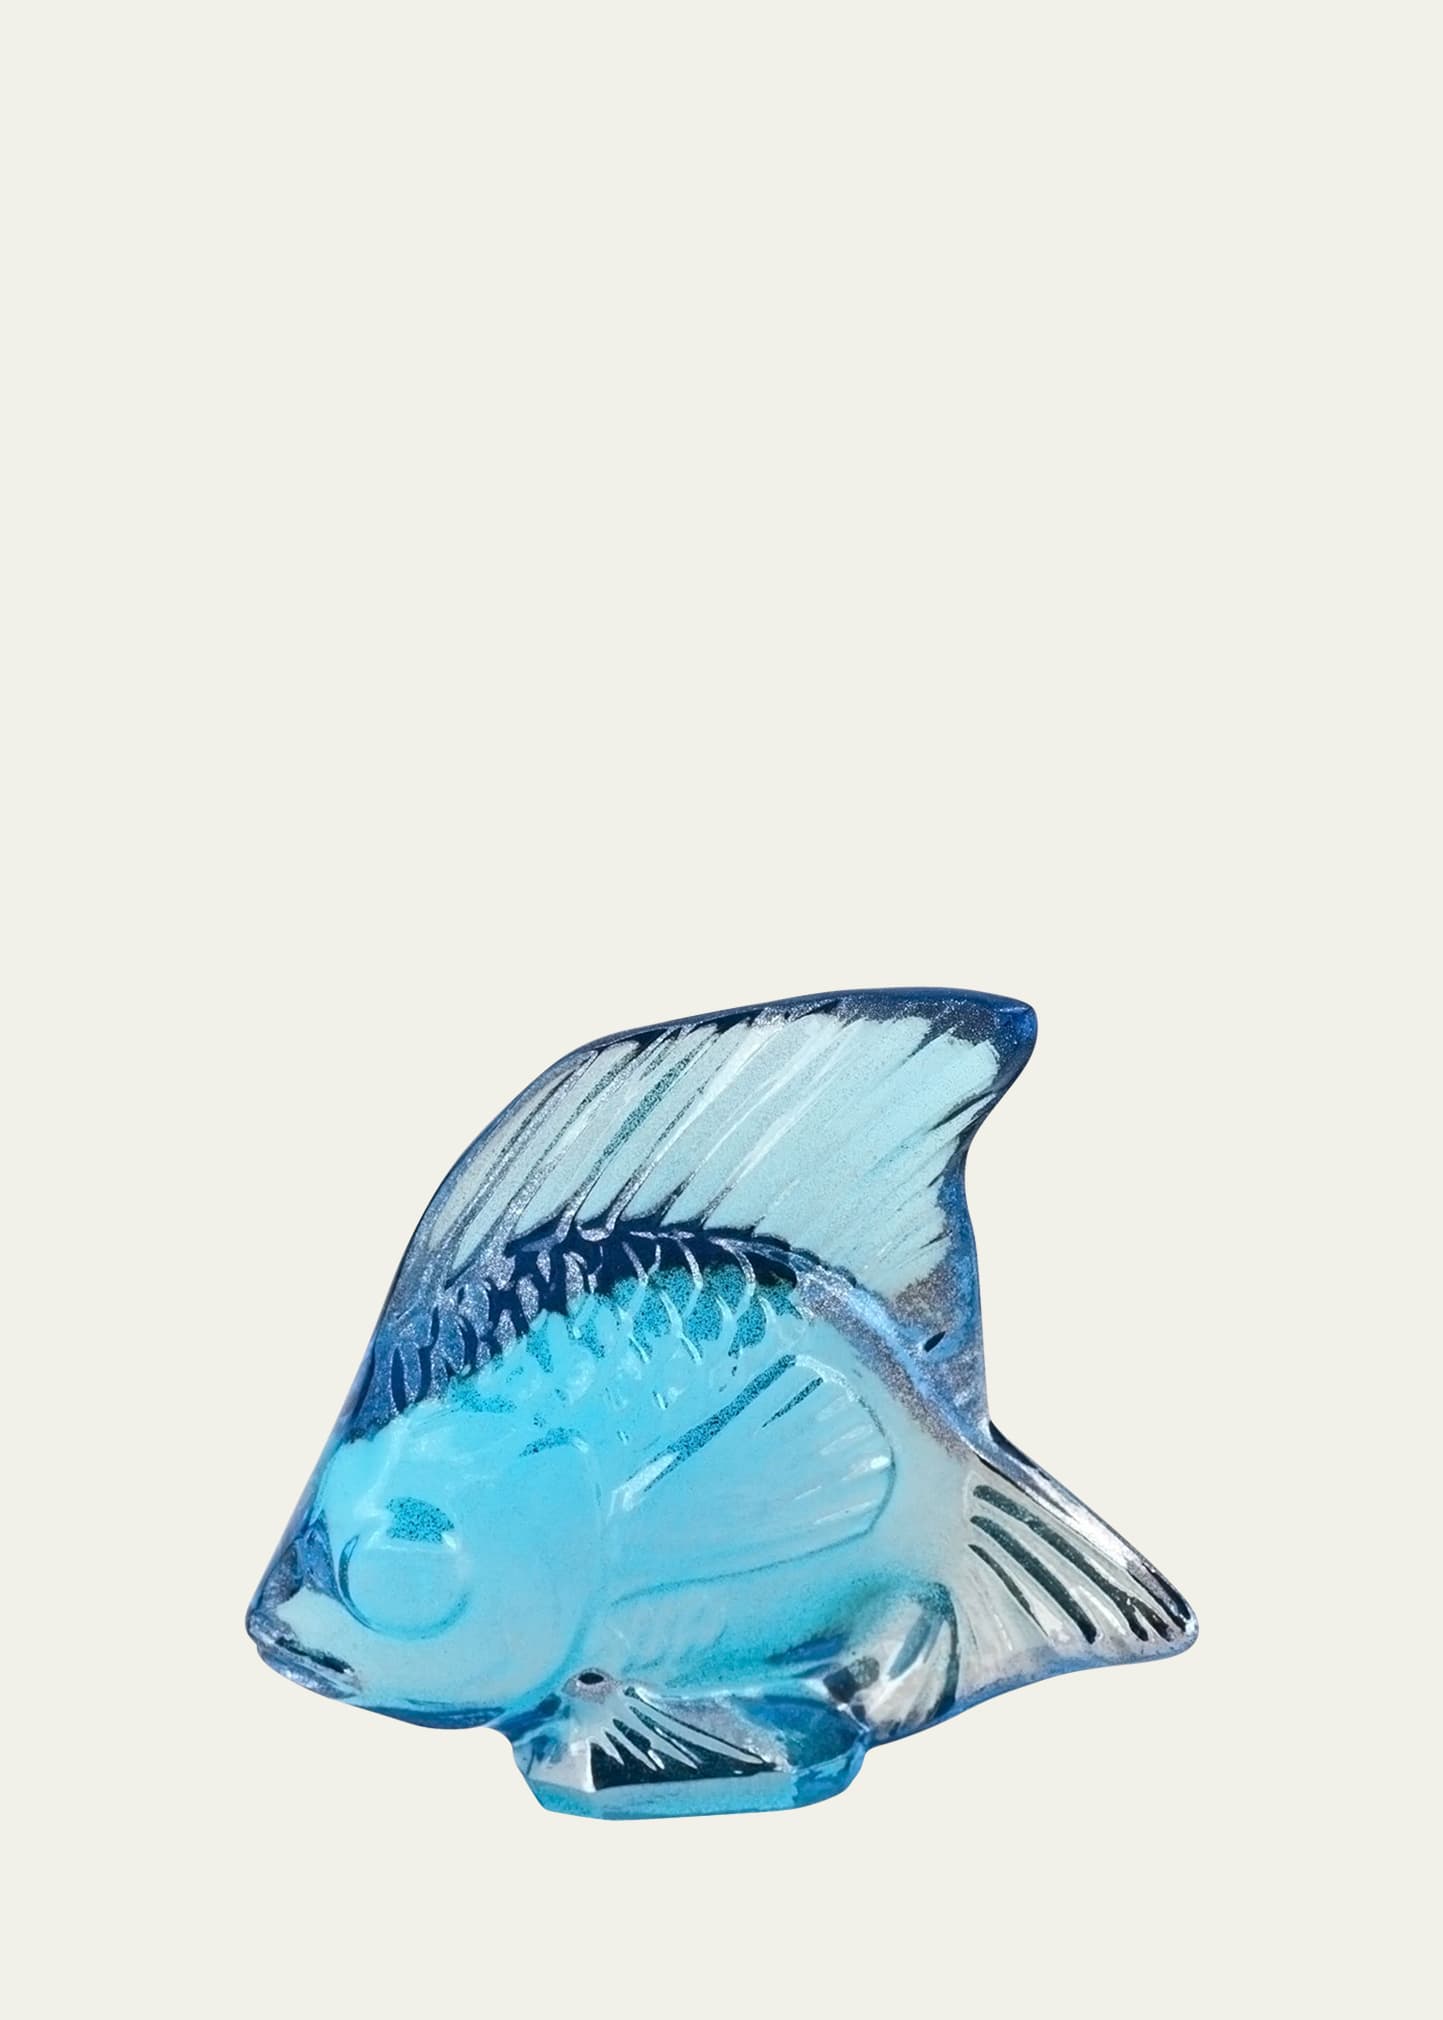 Lustre Blue Fish